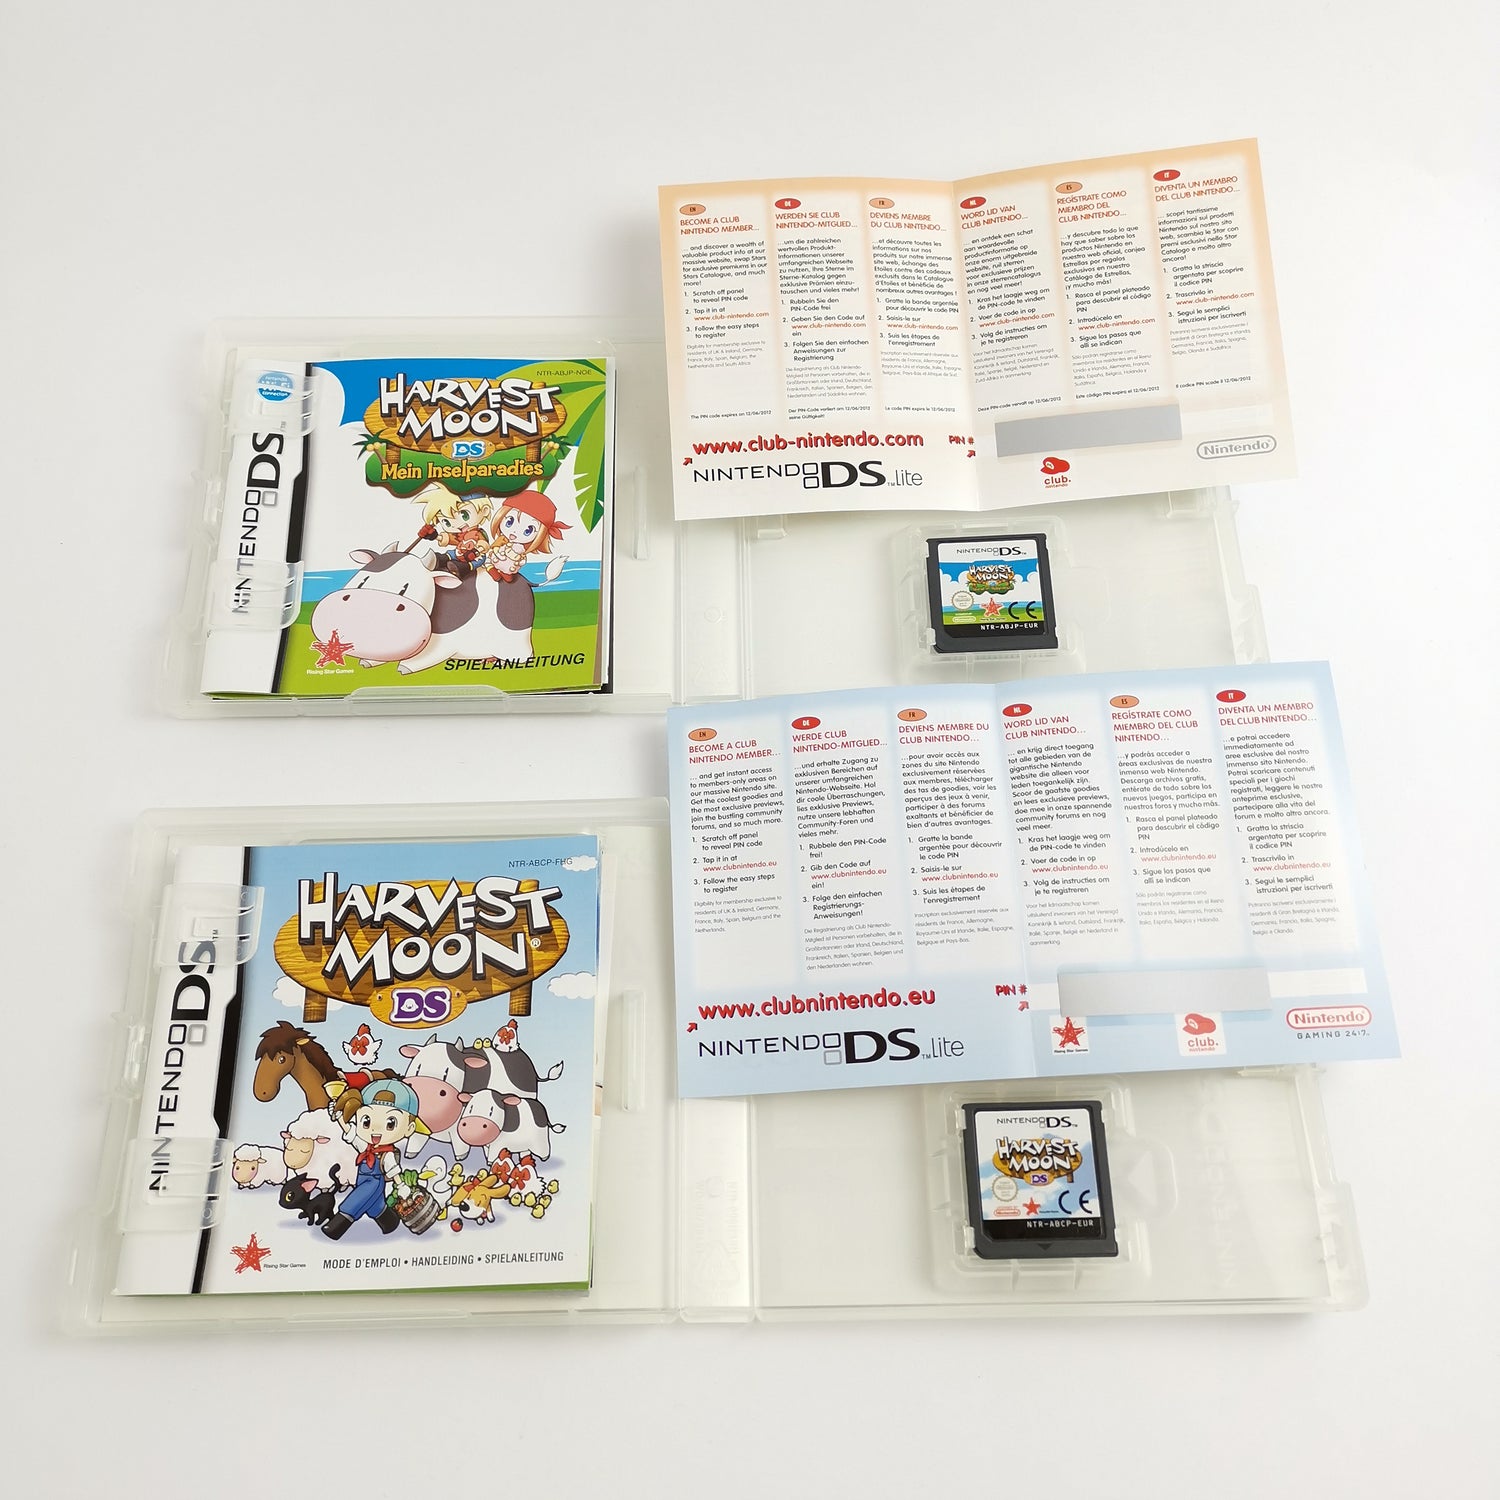 Nintendo DS games: Harvest Moon & Harvest Moon My Island Paradise | OVP PAL